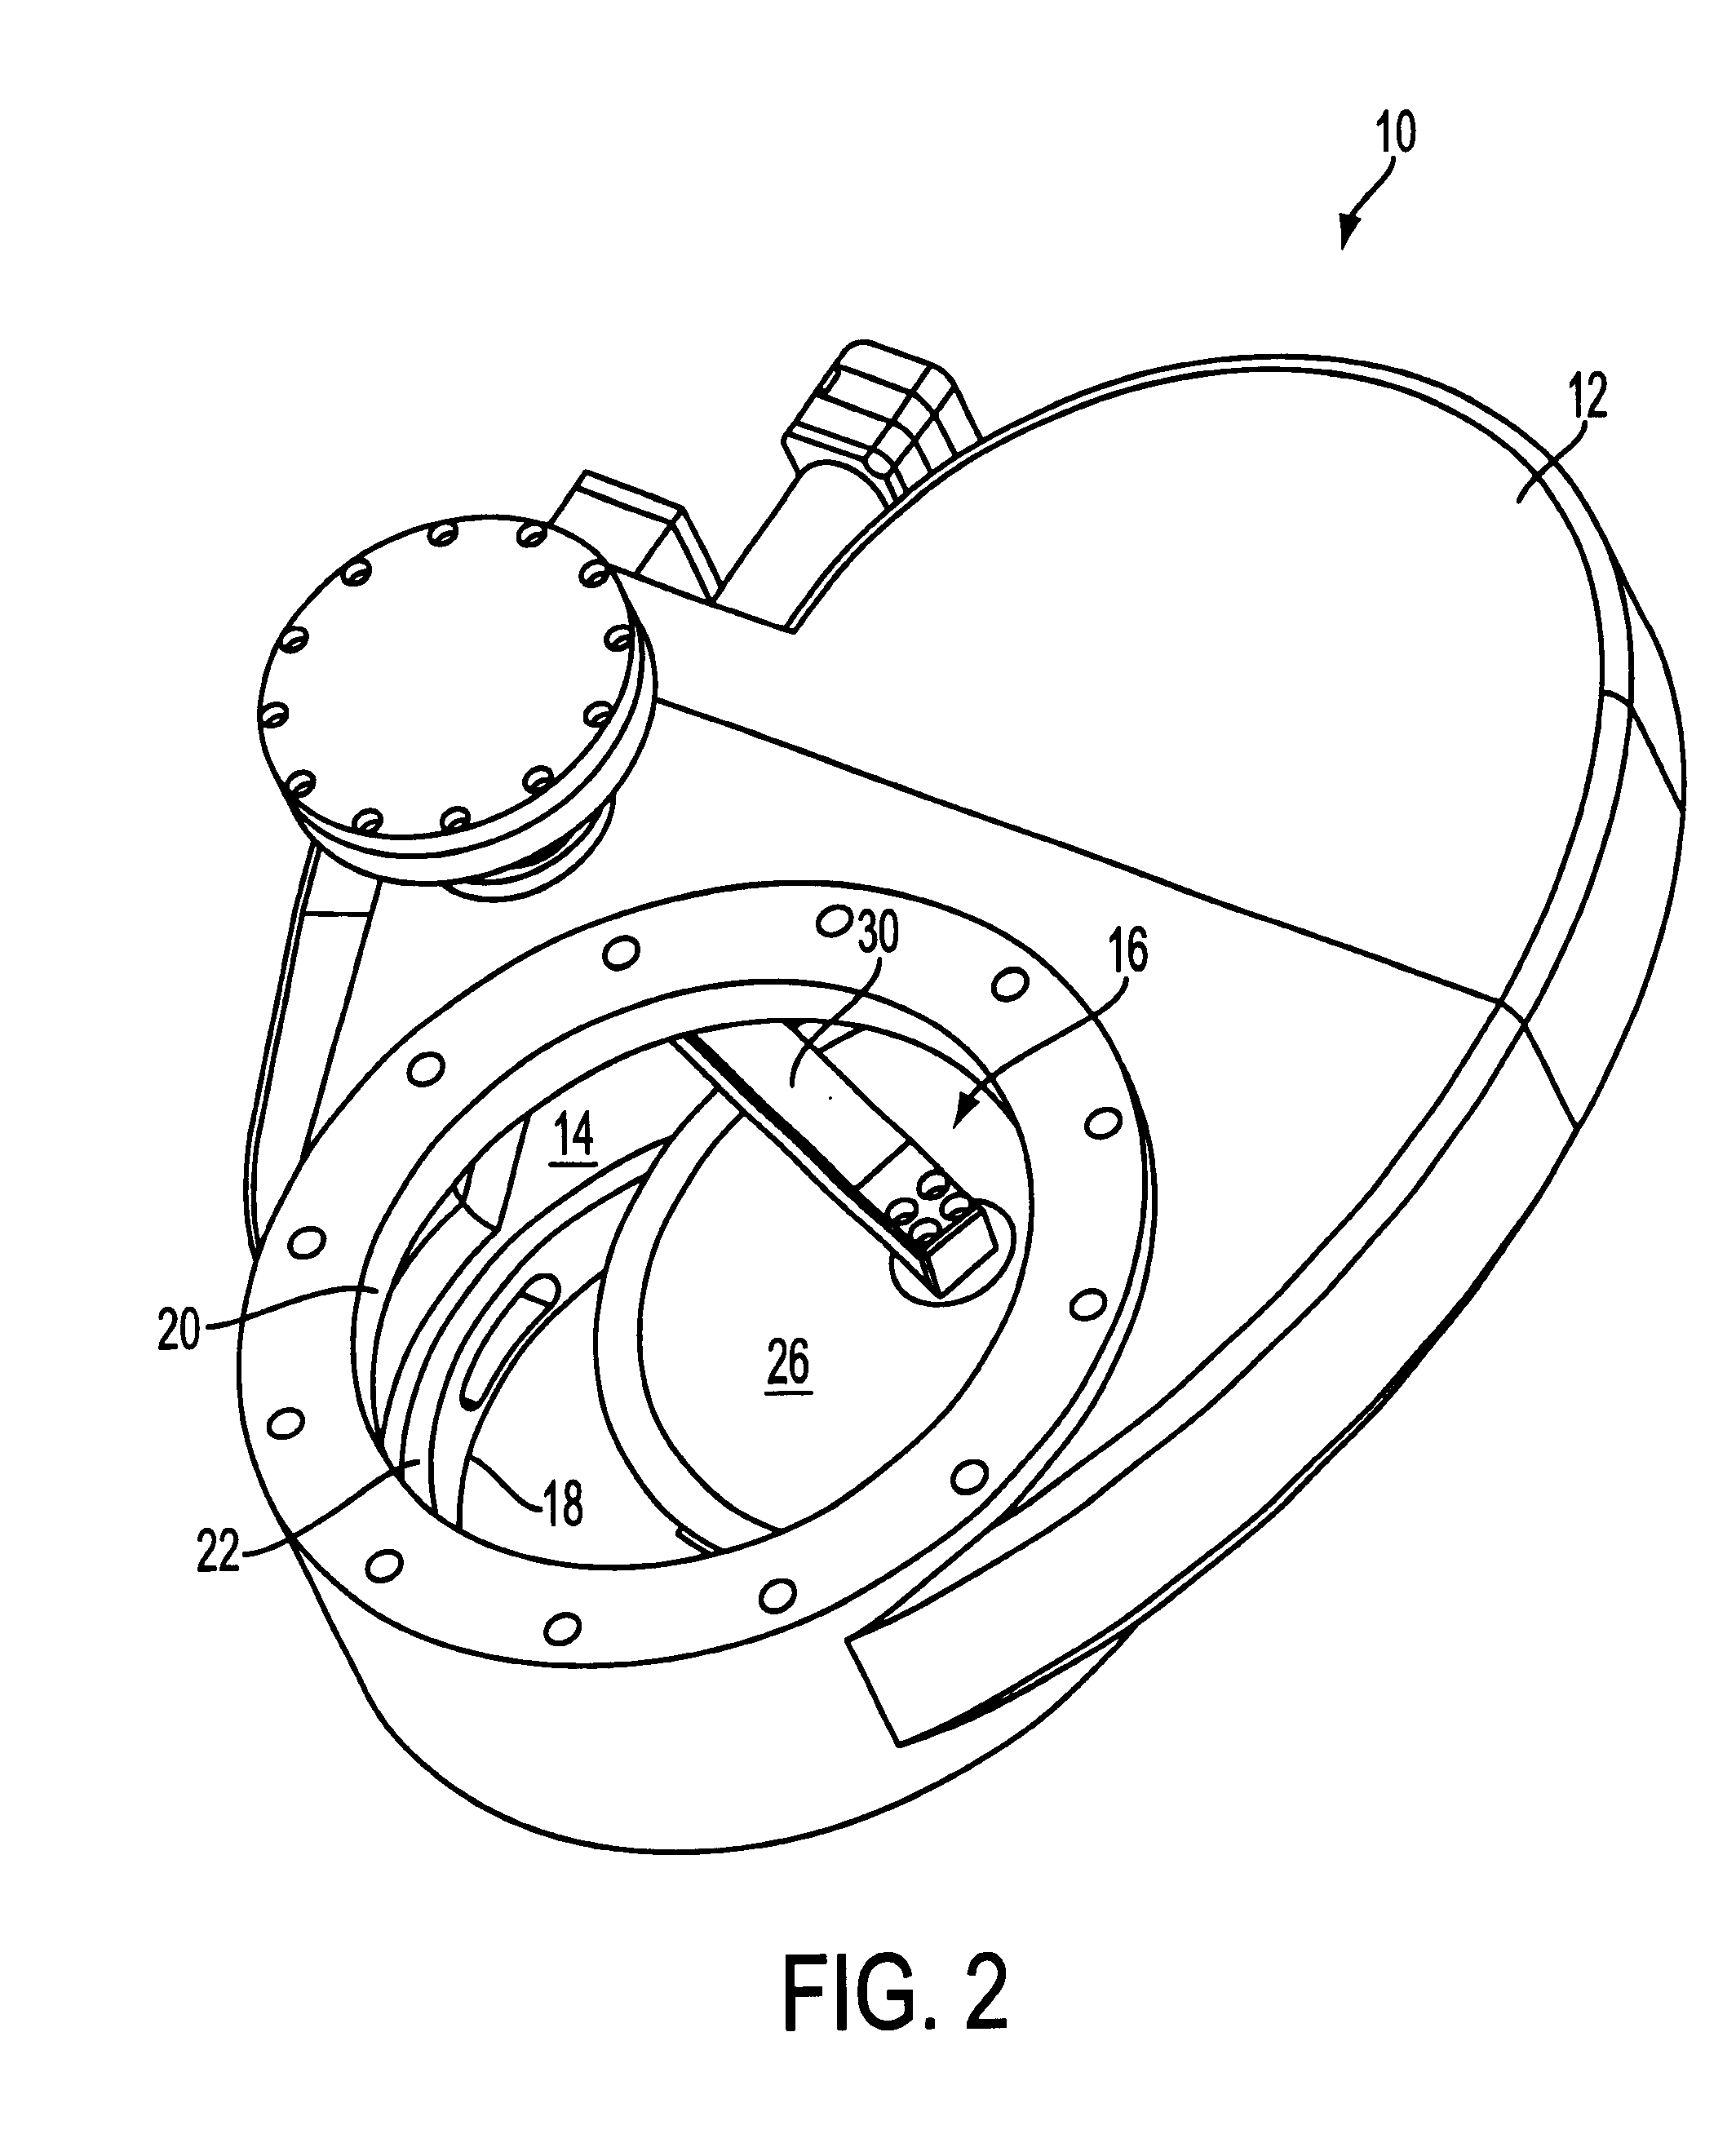 Dual pendulum valve assembly